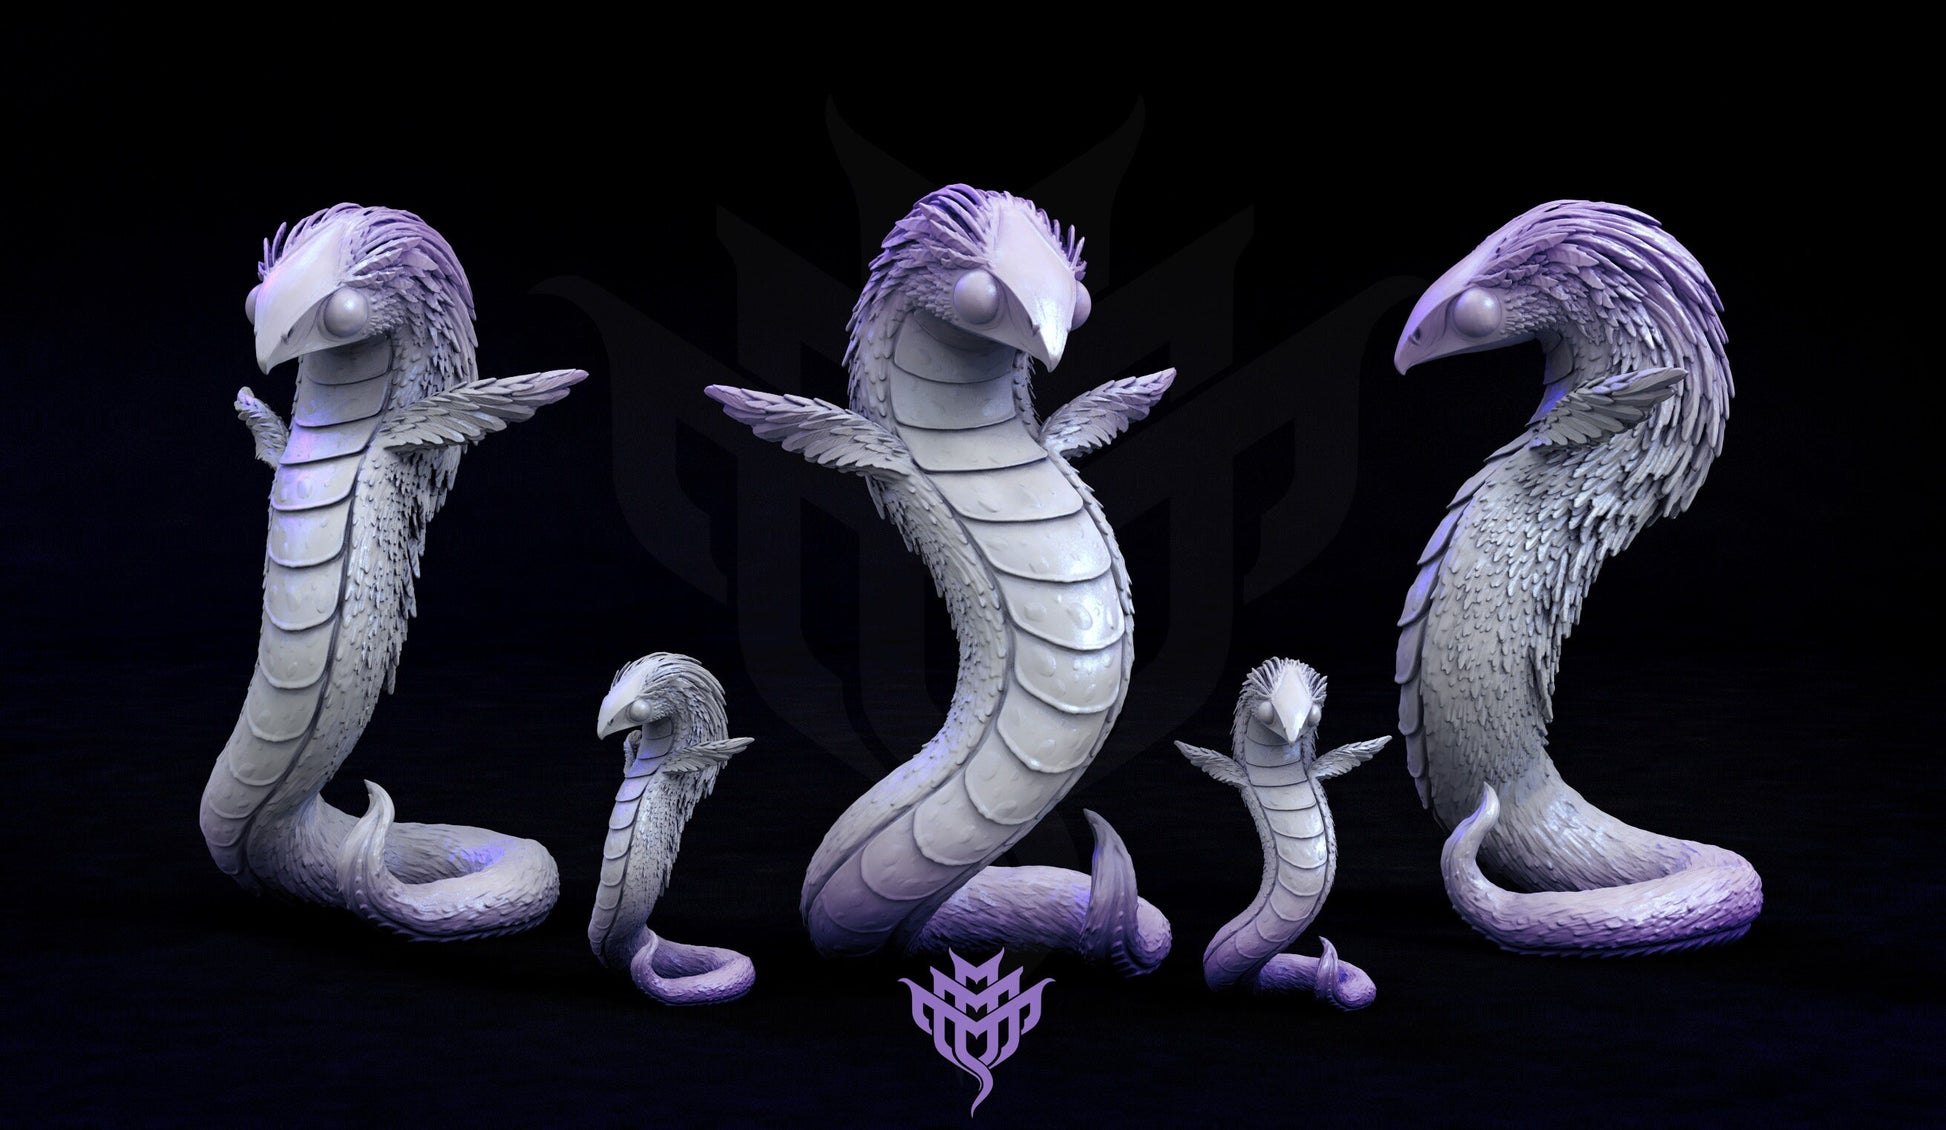 Vulture Worm - Mini Monster Mayhem Printed Miniature | Dungeons & Dragons | Pathfinder | Tabletop